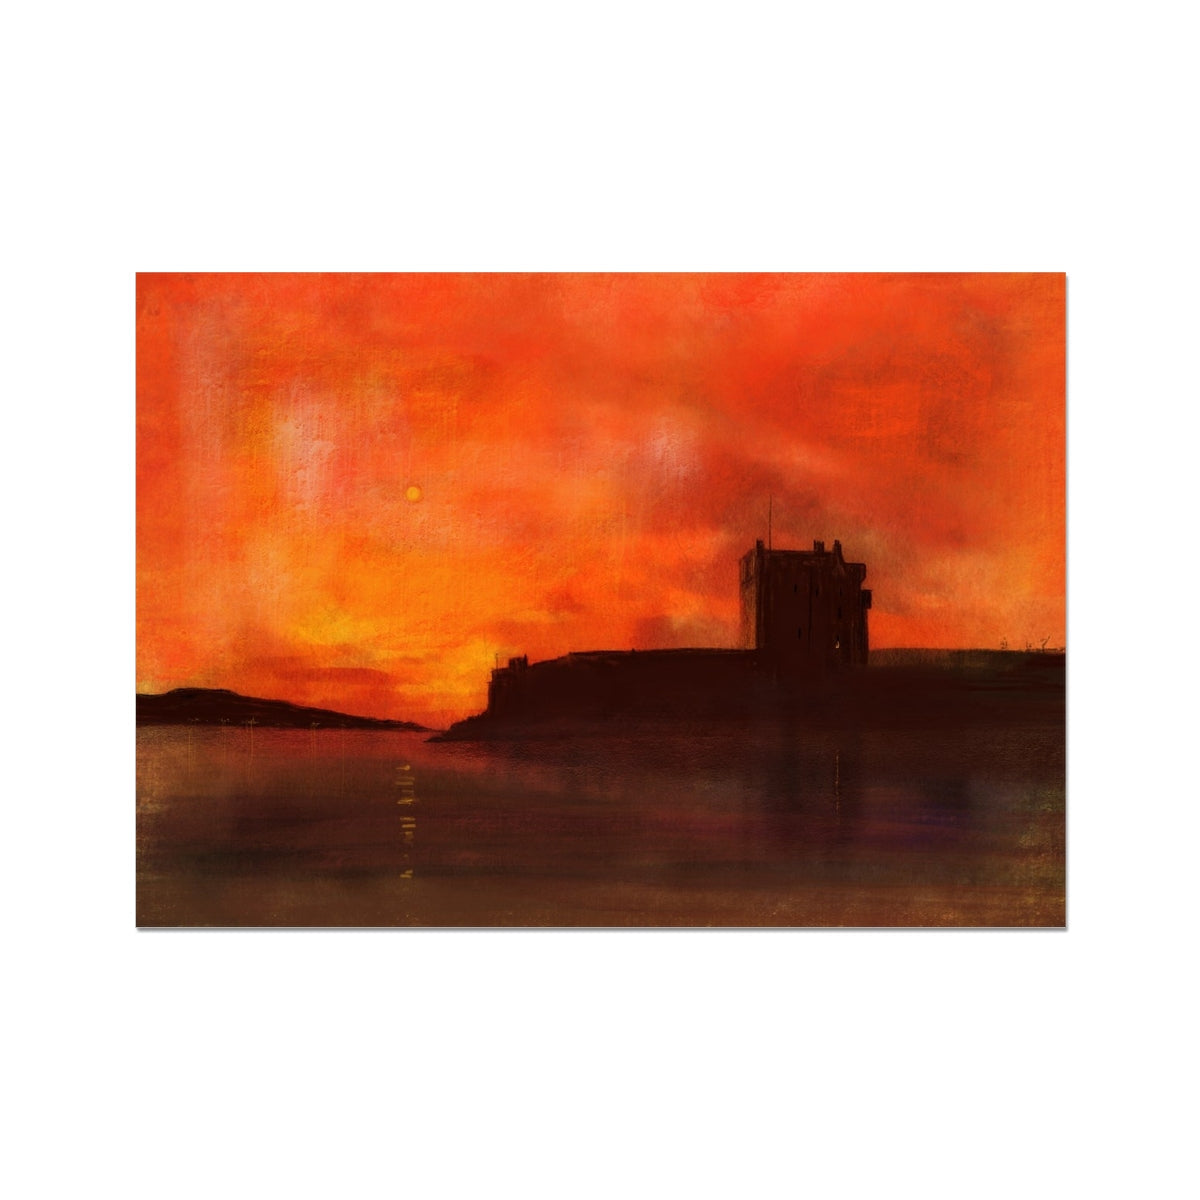 Broughty Castle Sunset Painting | Fine Art Prints From Scotland-Unframed Prints-Scottish Castles Art Gallery-A2 Landscape-Paintings, Prints, Homeware, Art Gifts From Scotland By Scottish Artist Kevin Hunter